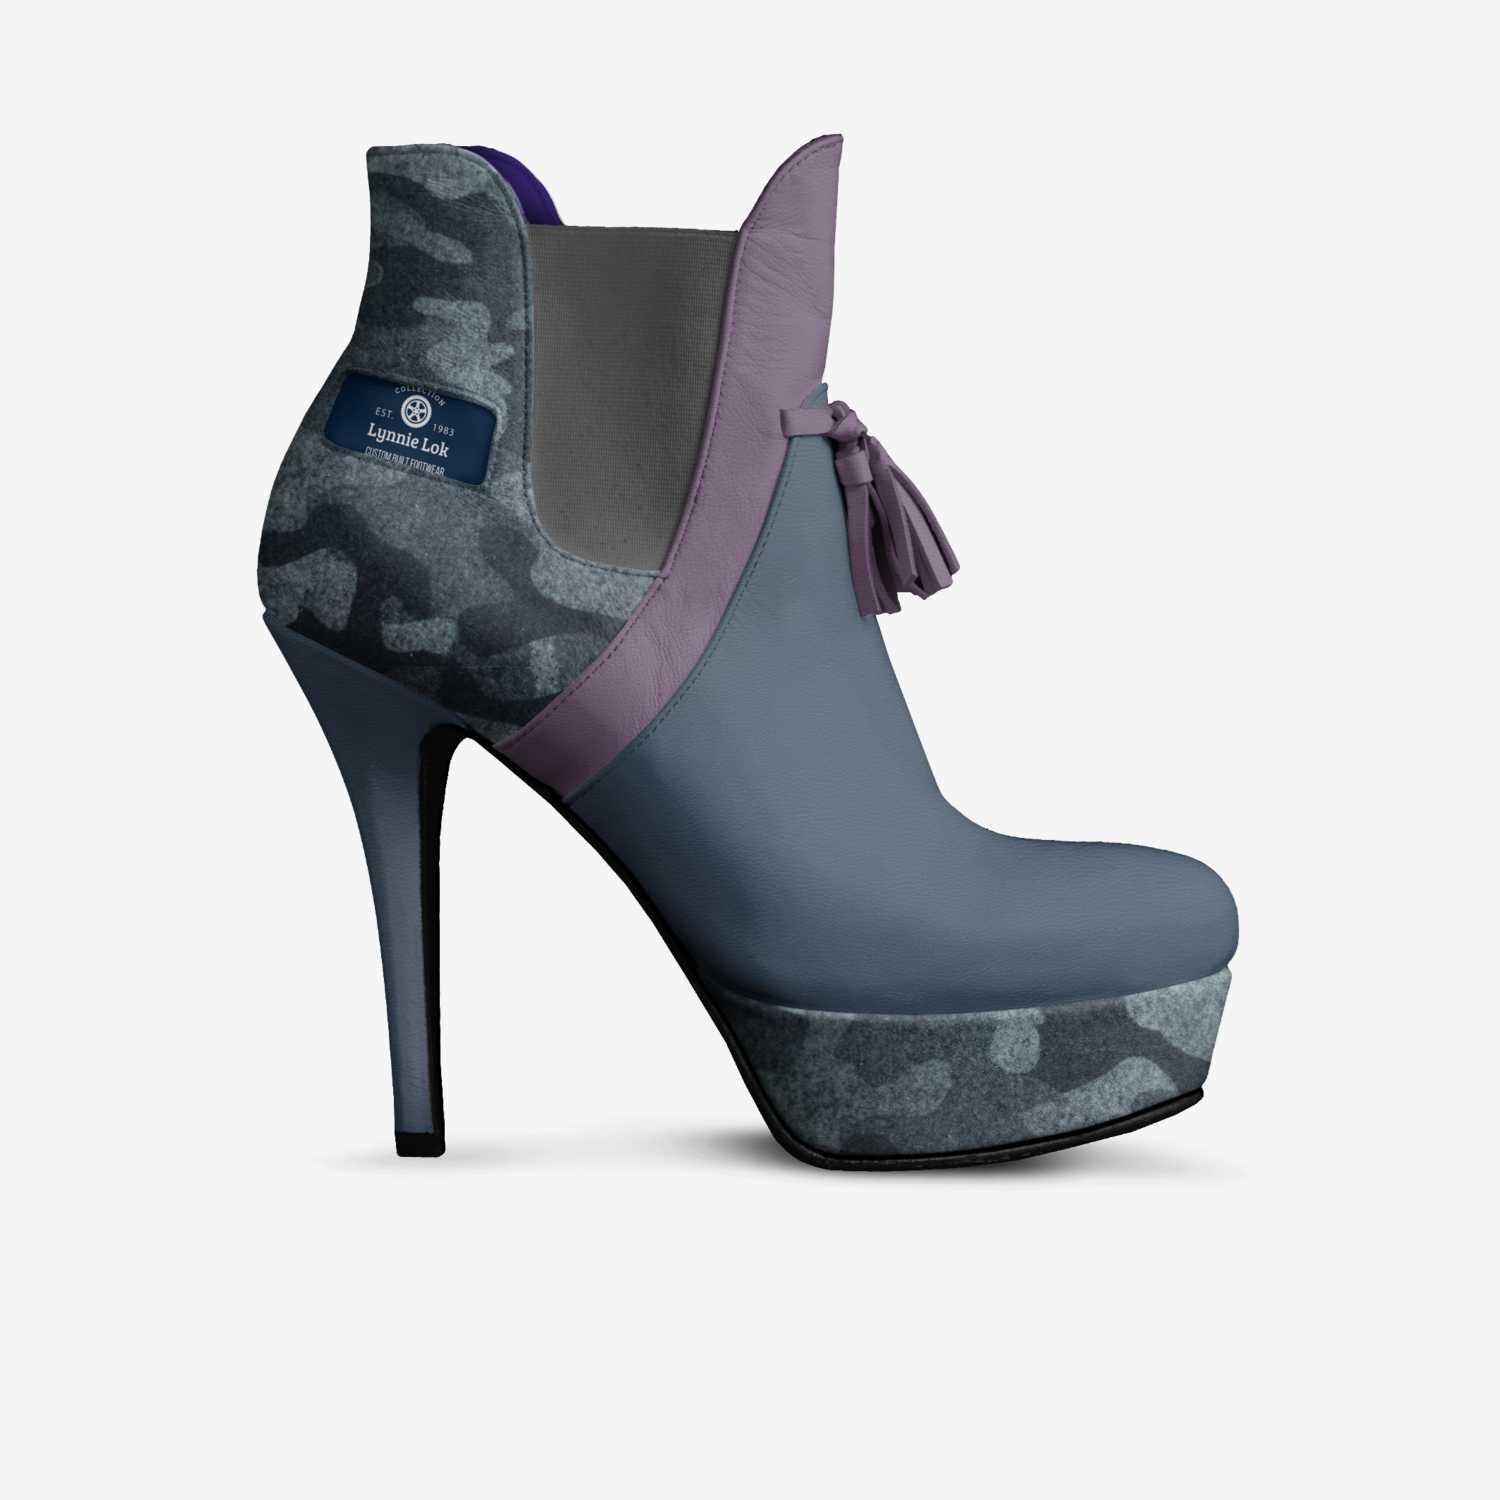 Lynnie Lok custom made in Italy shoes by Heidi Lynn Rolle | Side view